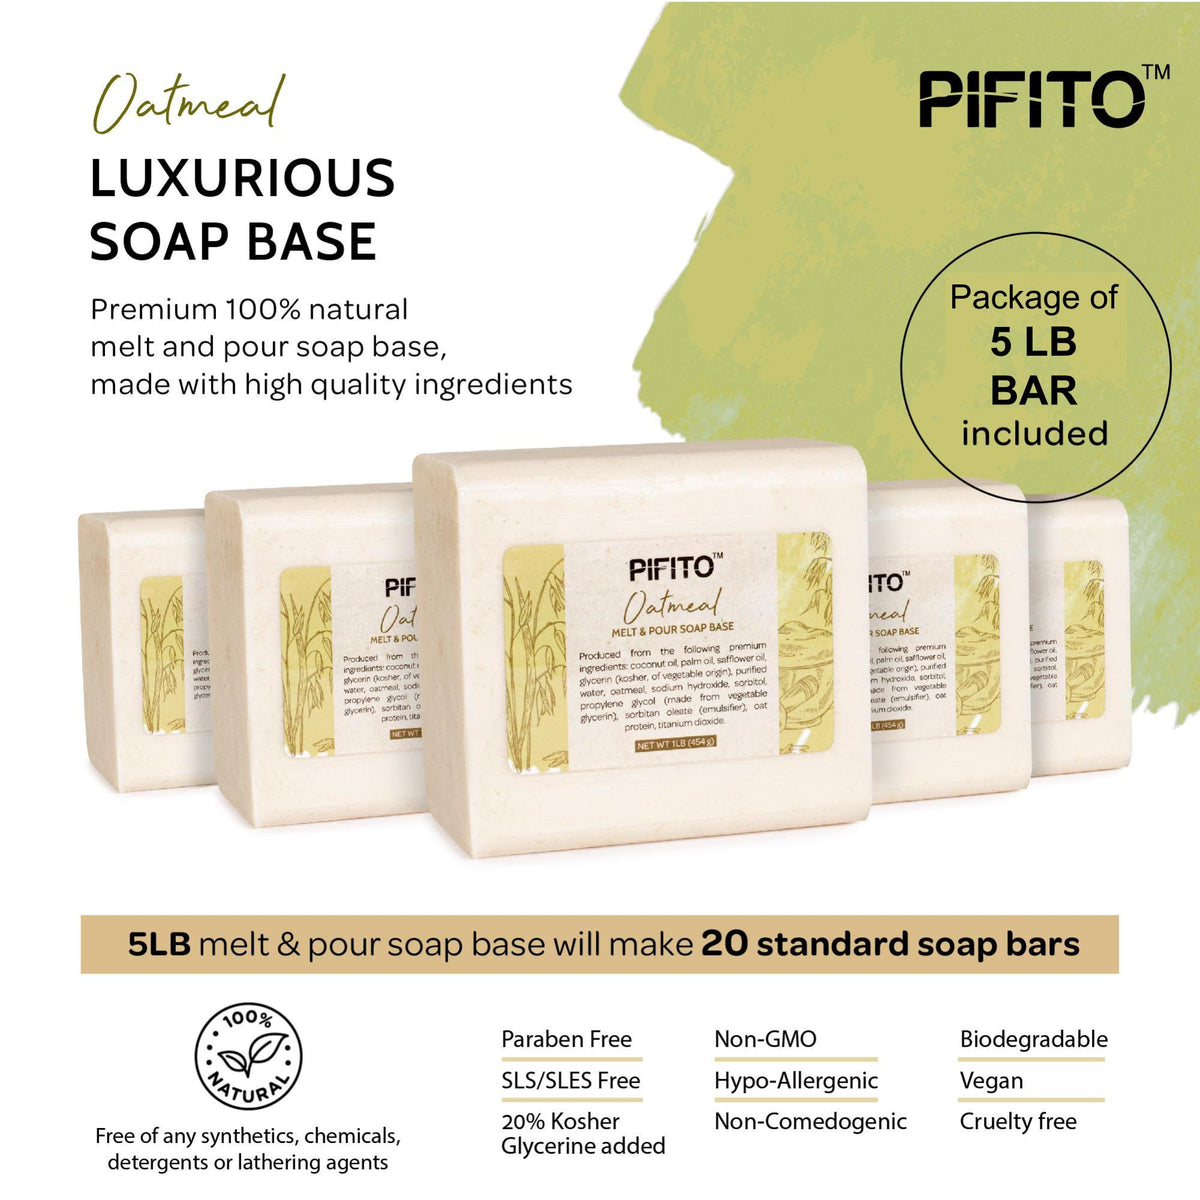 Pifito Soap Making Oils Mix No. 2 │ 60 Oz Quick Mix Blend of Pre-Measu